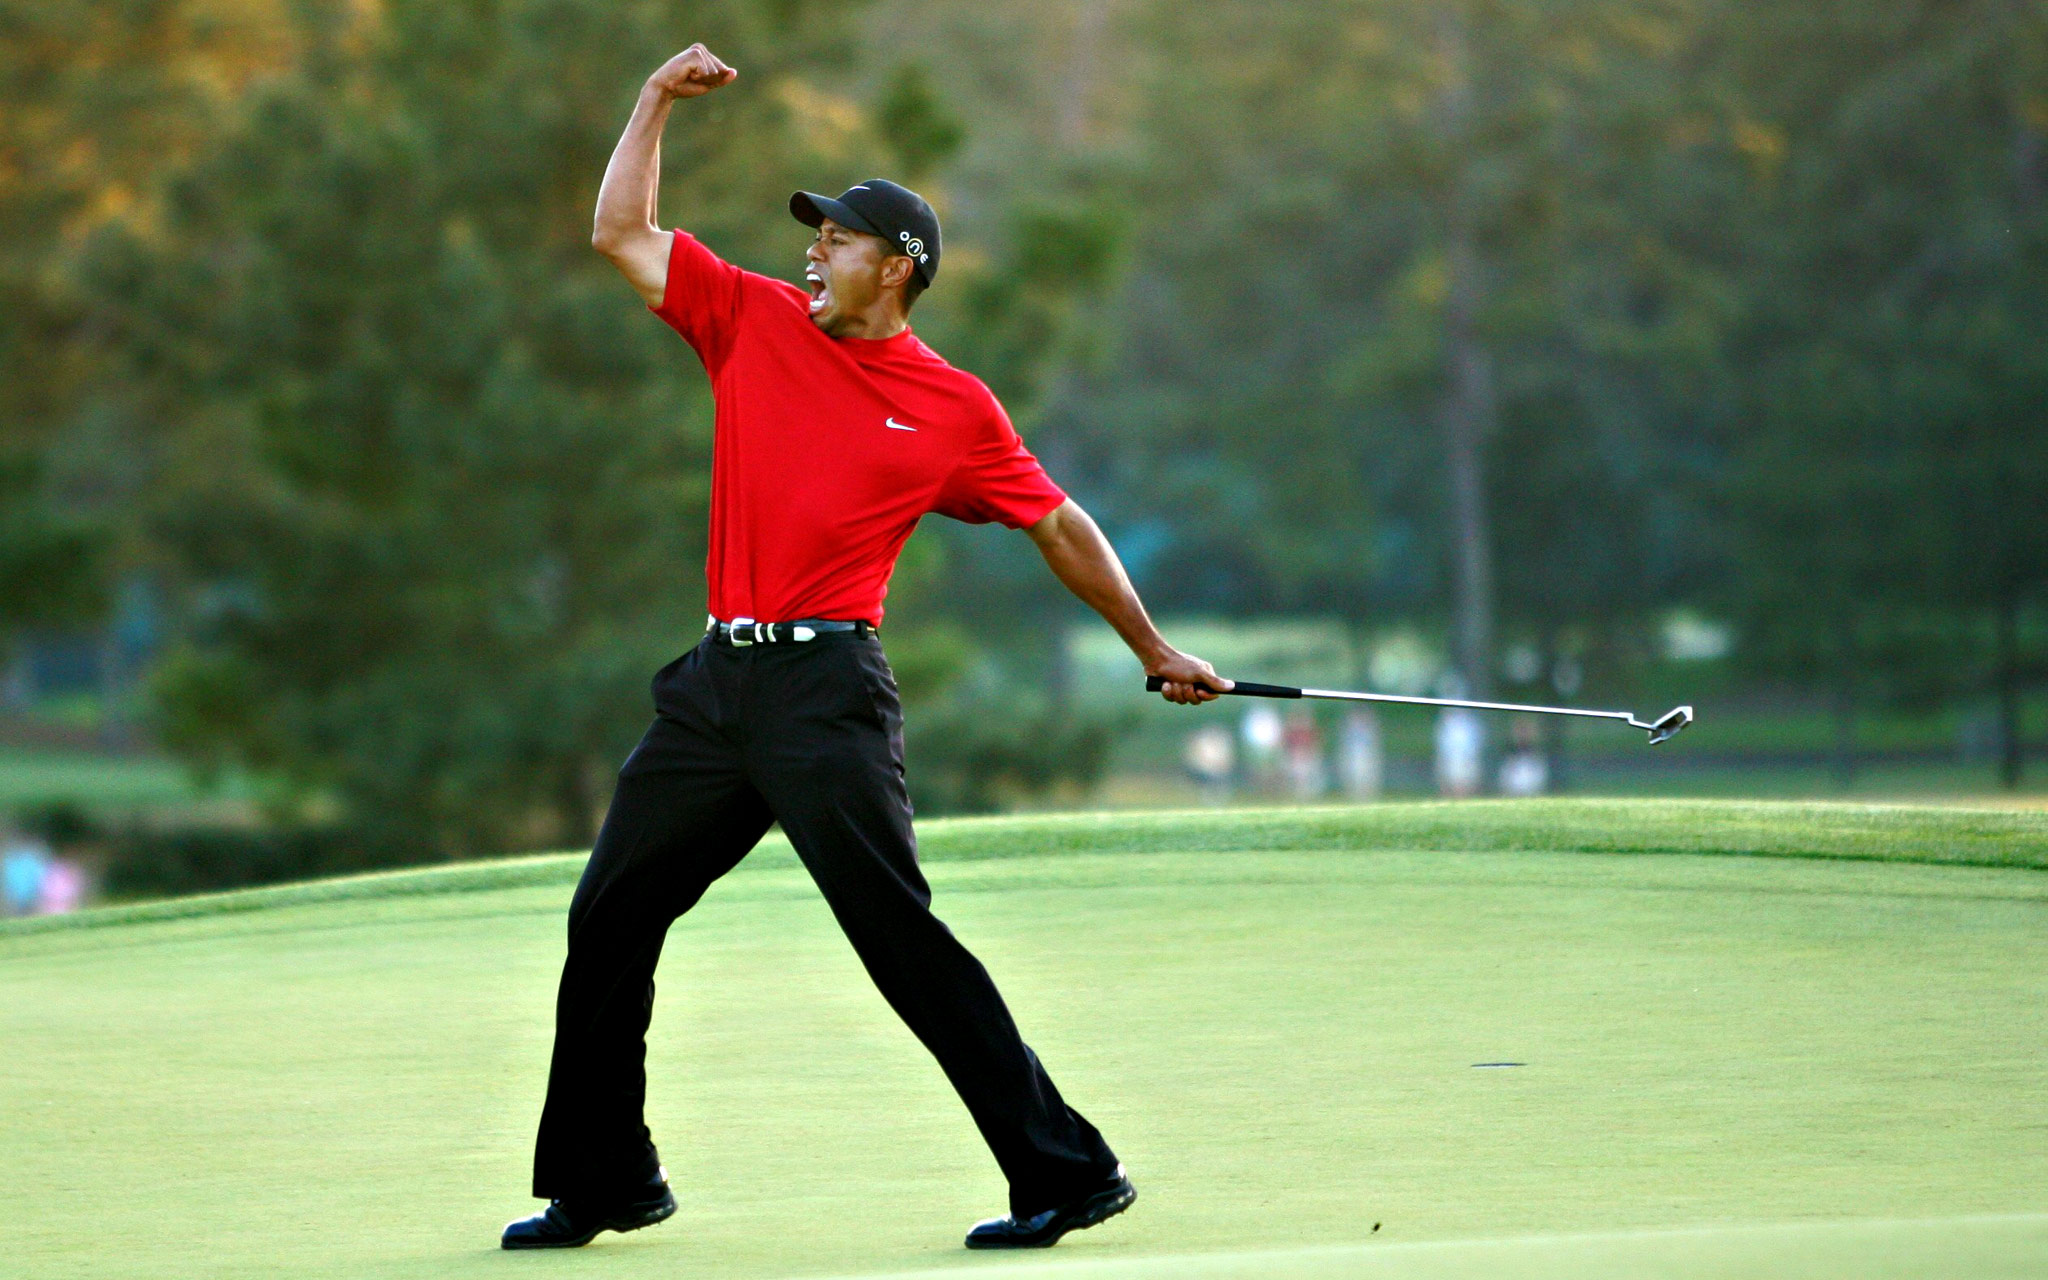 #3 - Tiger Woods Scotty Cameron Newport 2.0 